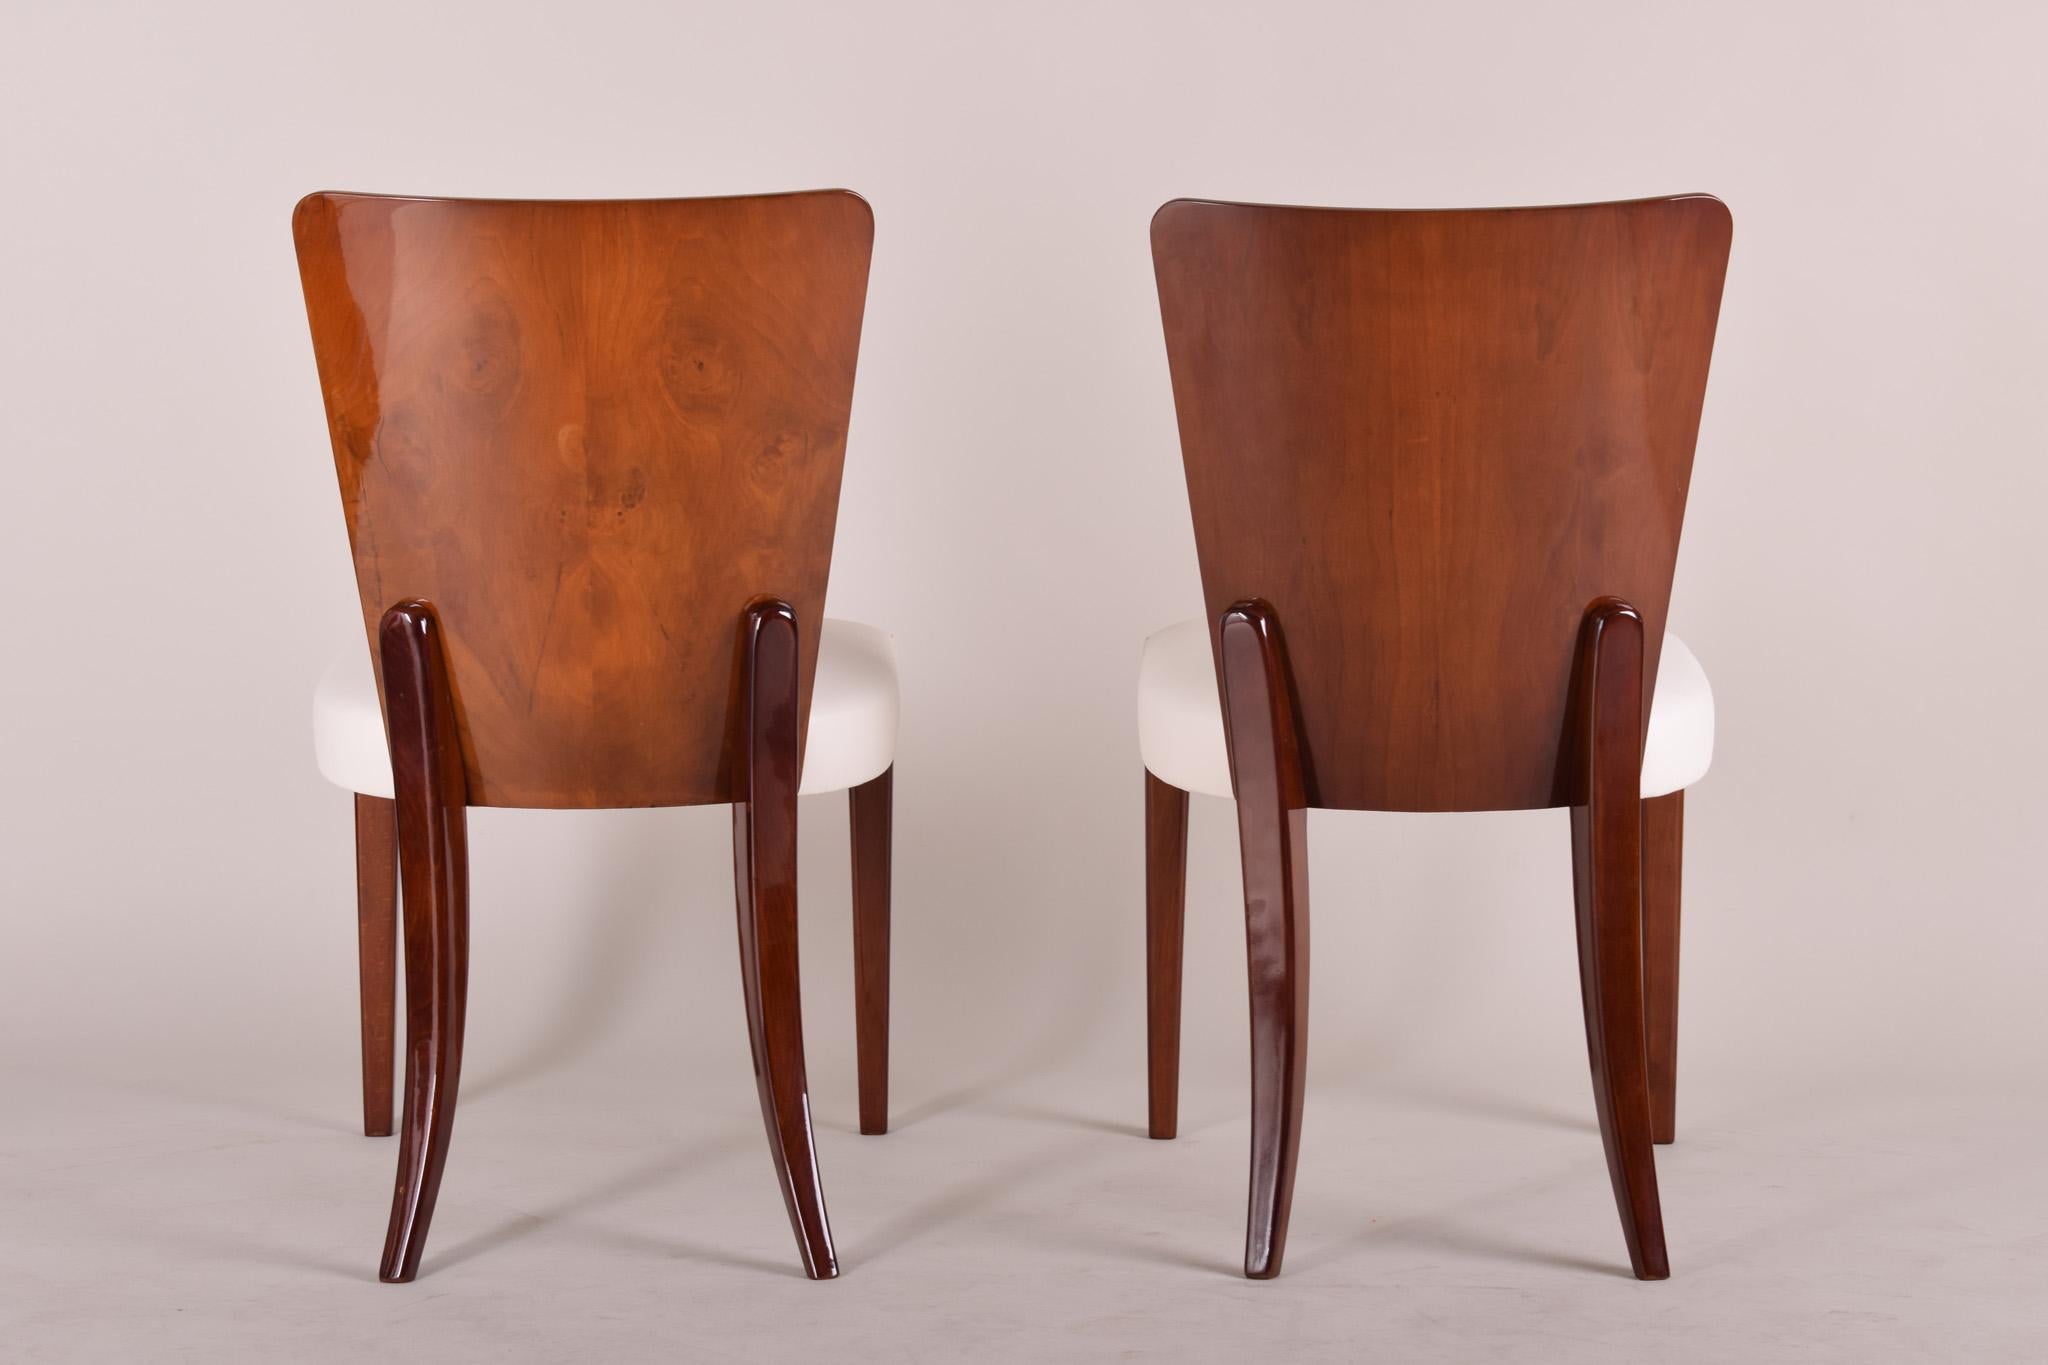 Mid-20th Century Czech Art Deco Chairs, Six Pieces, Designed by Jindrich Halabala, 1940-1949